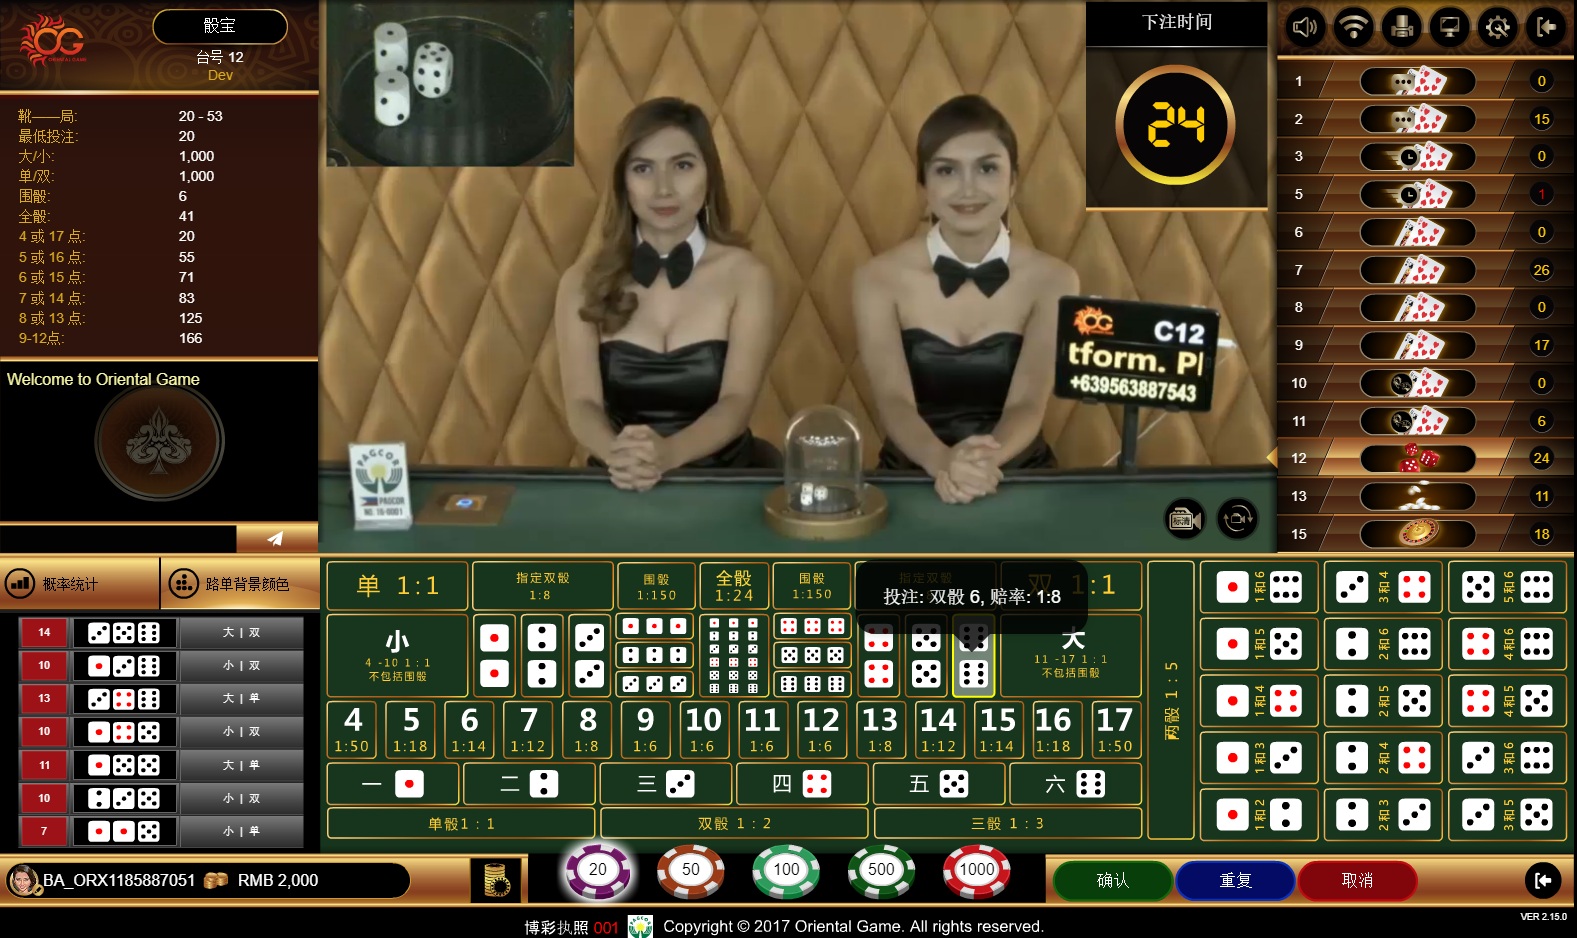 Casino war game odds